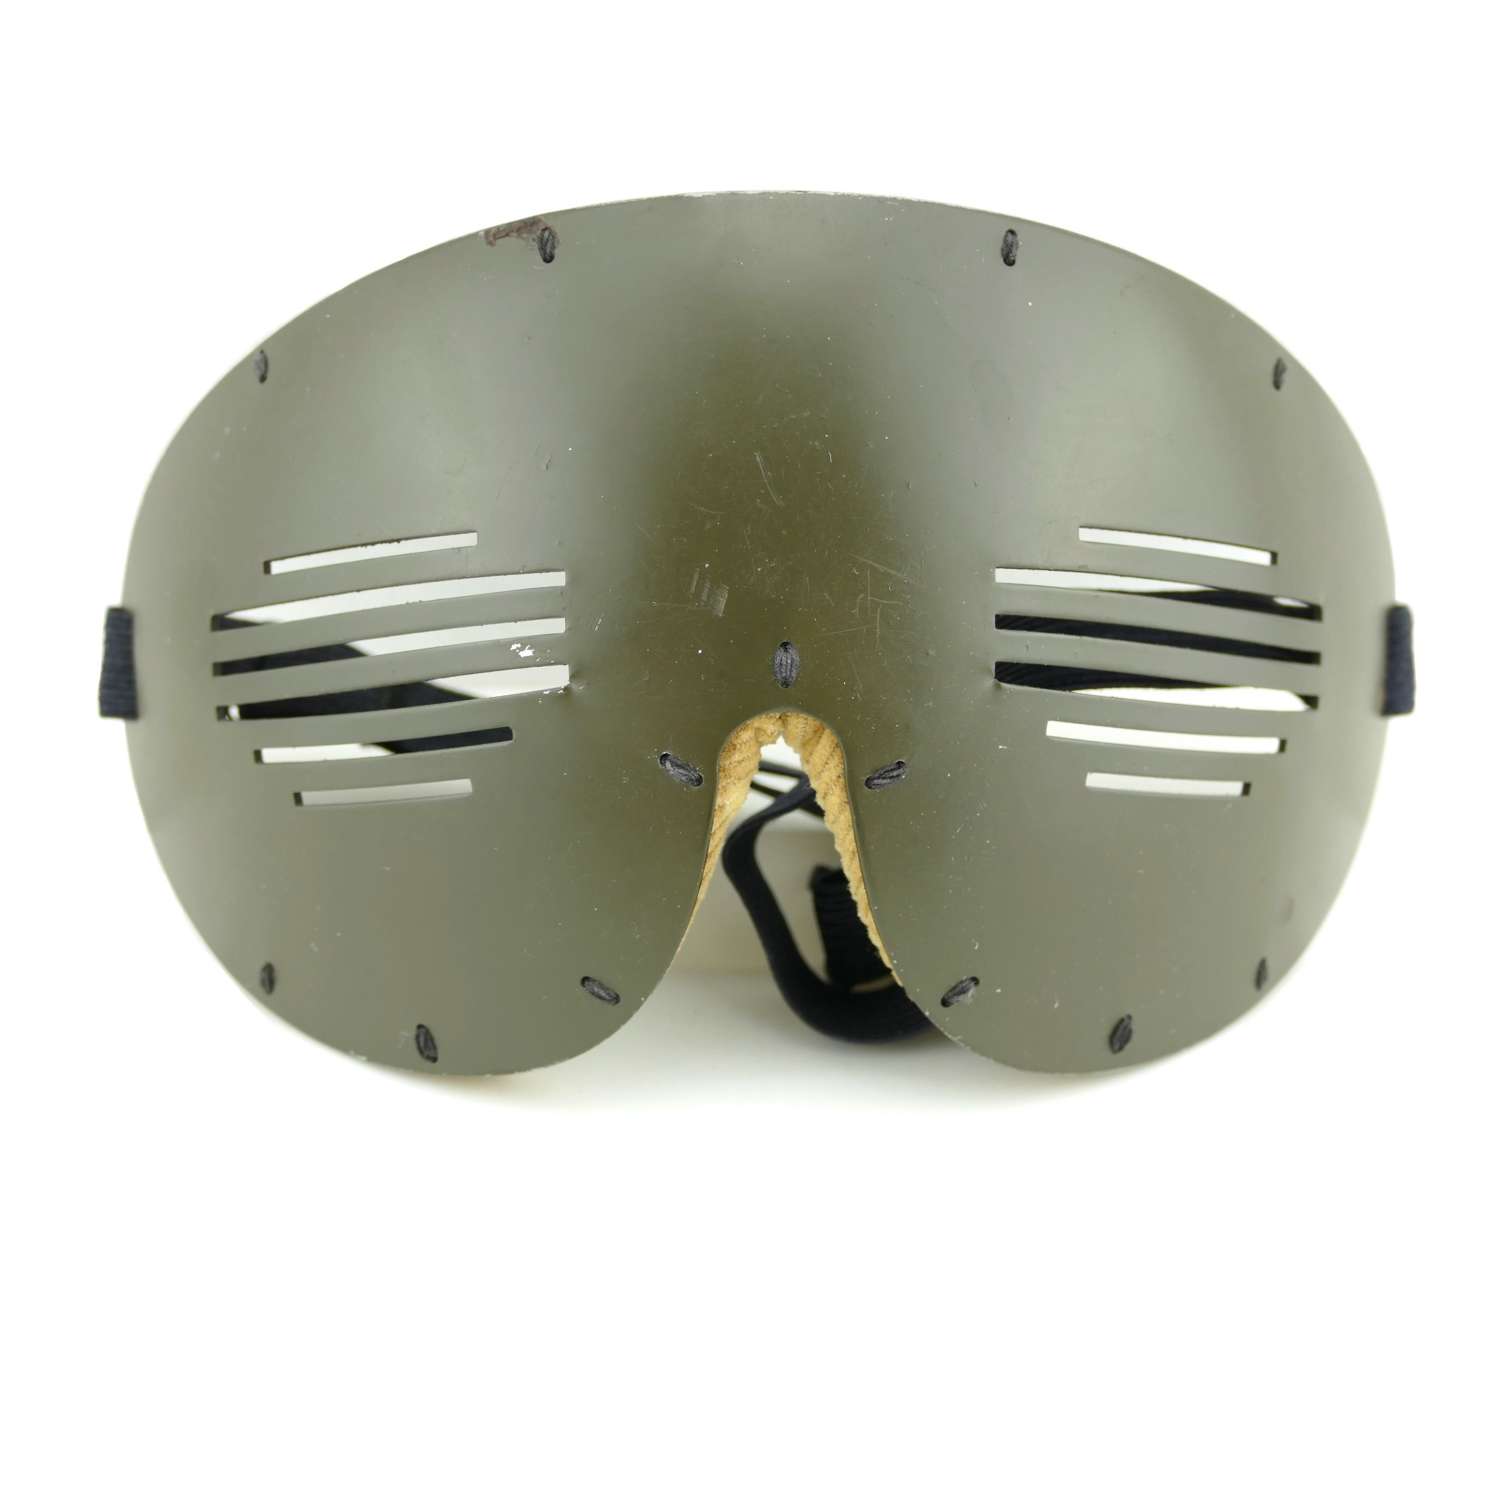 USAAF Anti-flak goggles